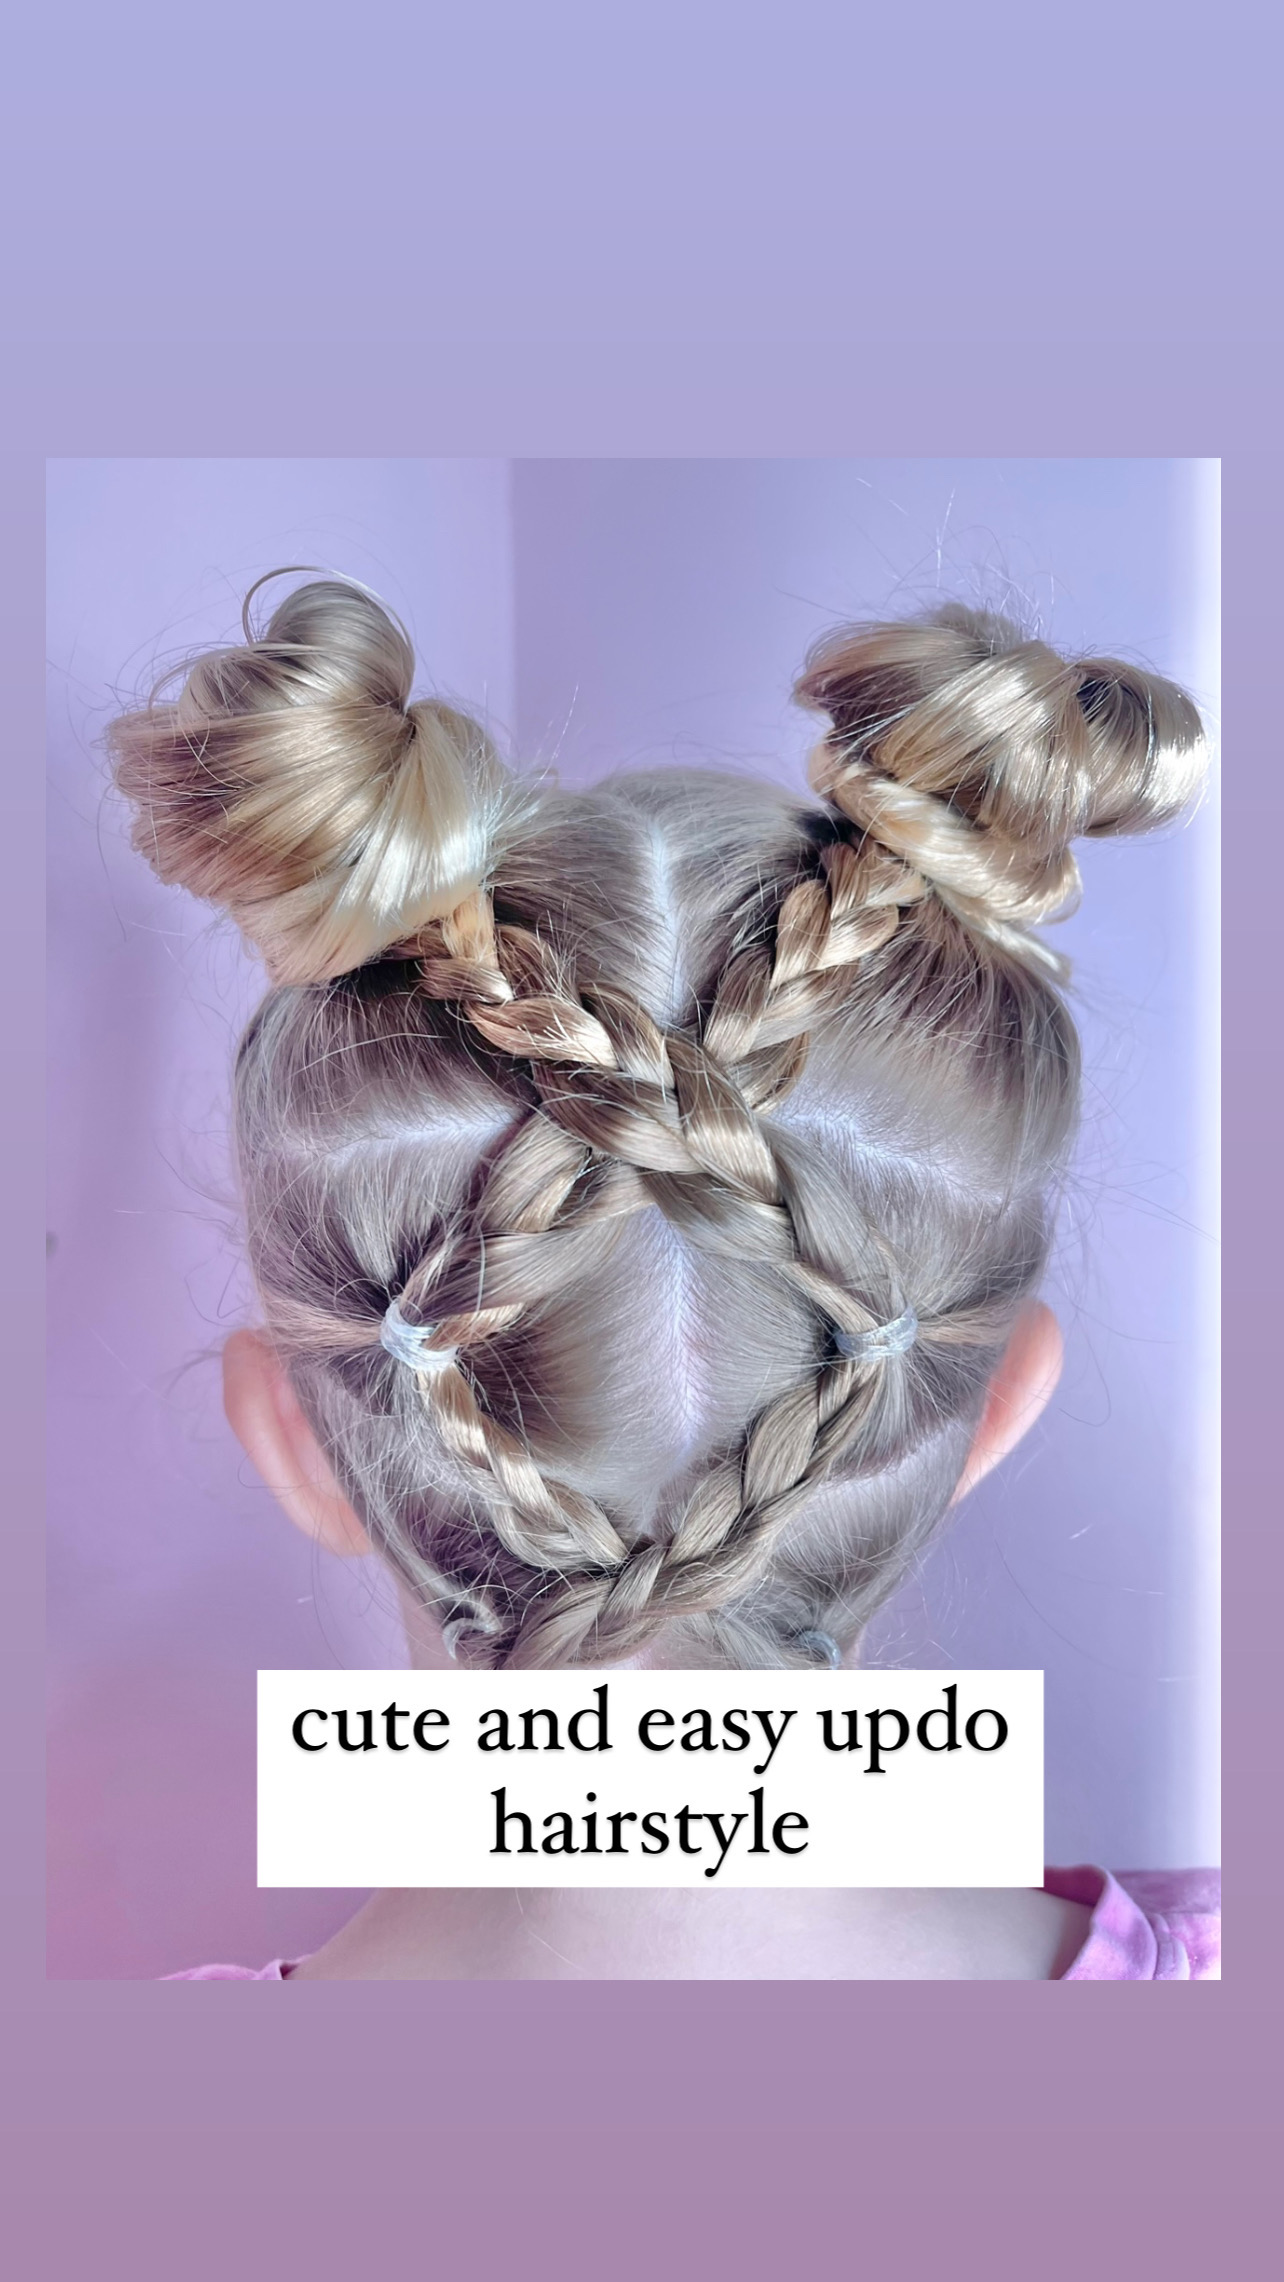 3 Super easy back-to-school hairstyle ideas | Brooklyn Hair